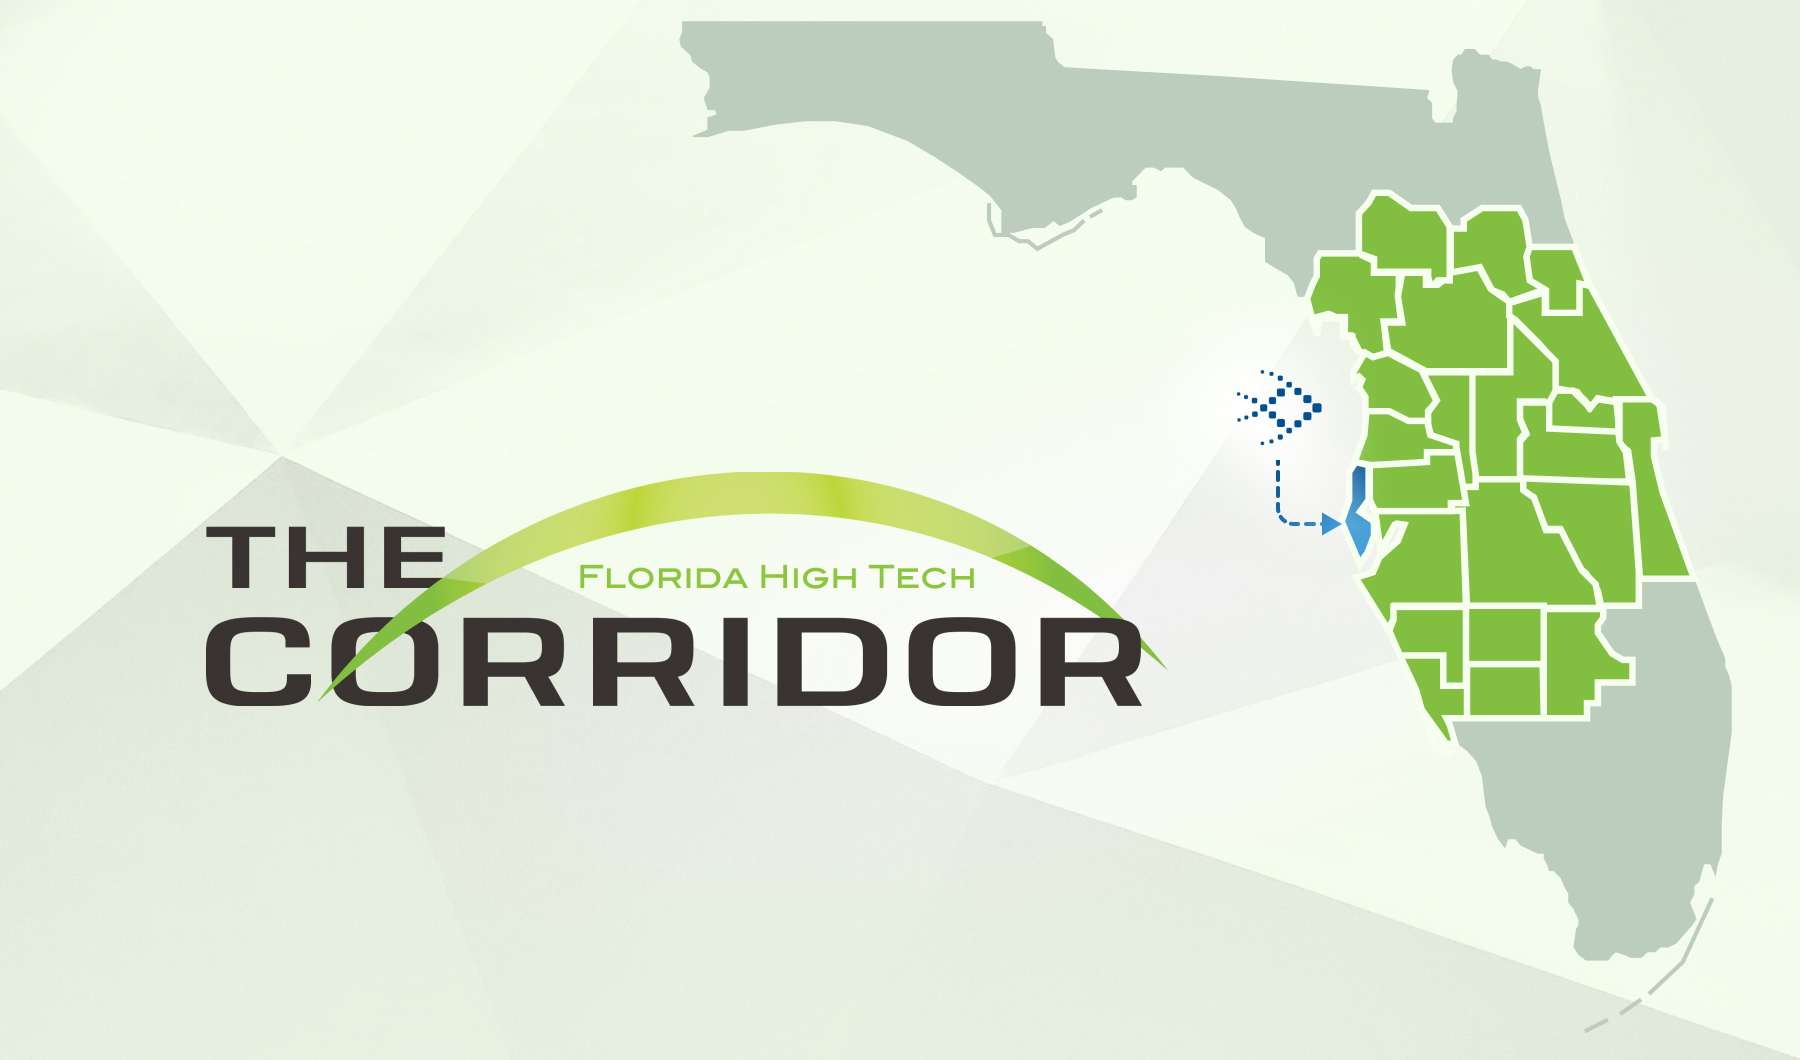 Mobile Solutions Company Establishes Strong Presence within Florida’s High Tech Corridor